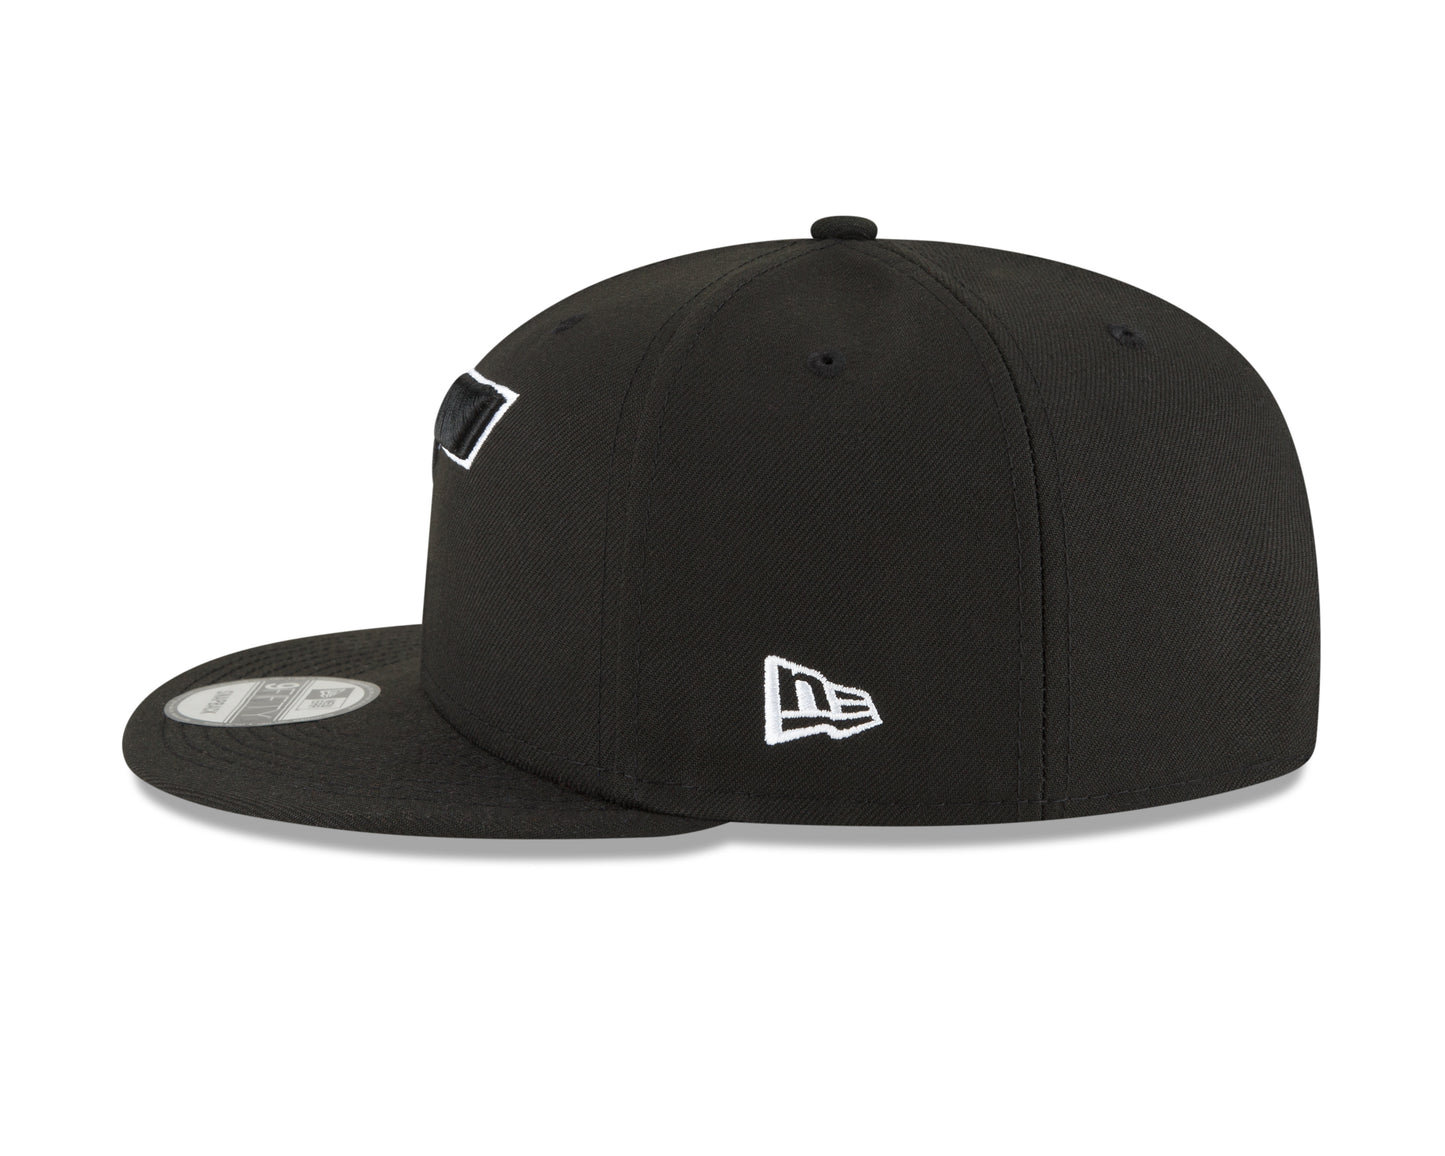 Utah Jazz Black & White Back Half Series 9FIFTY Snap Back Hat